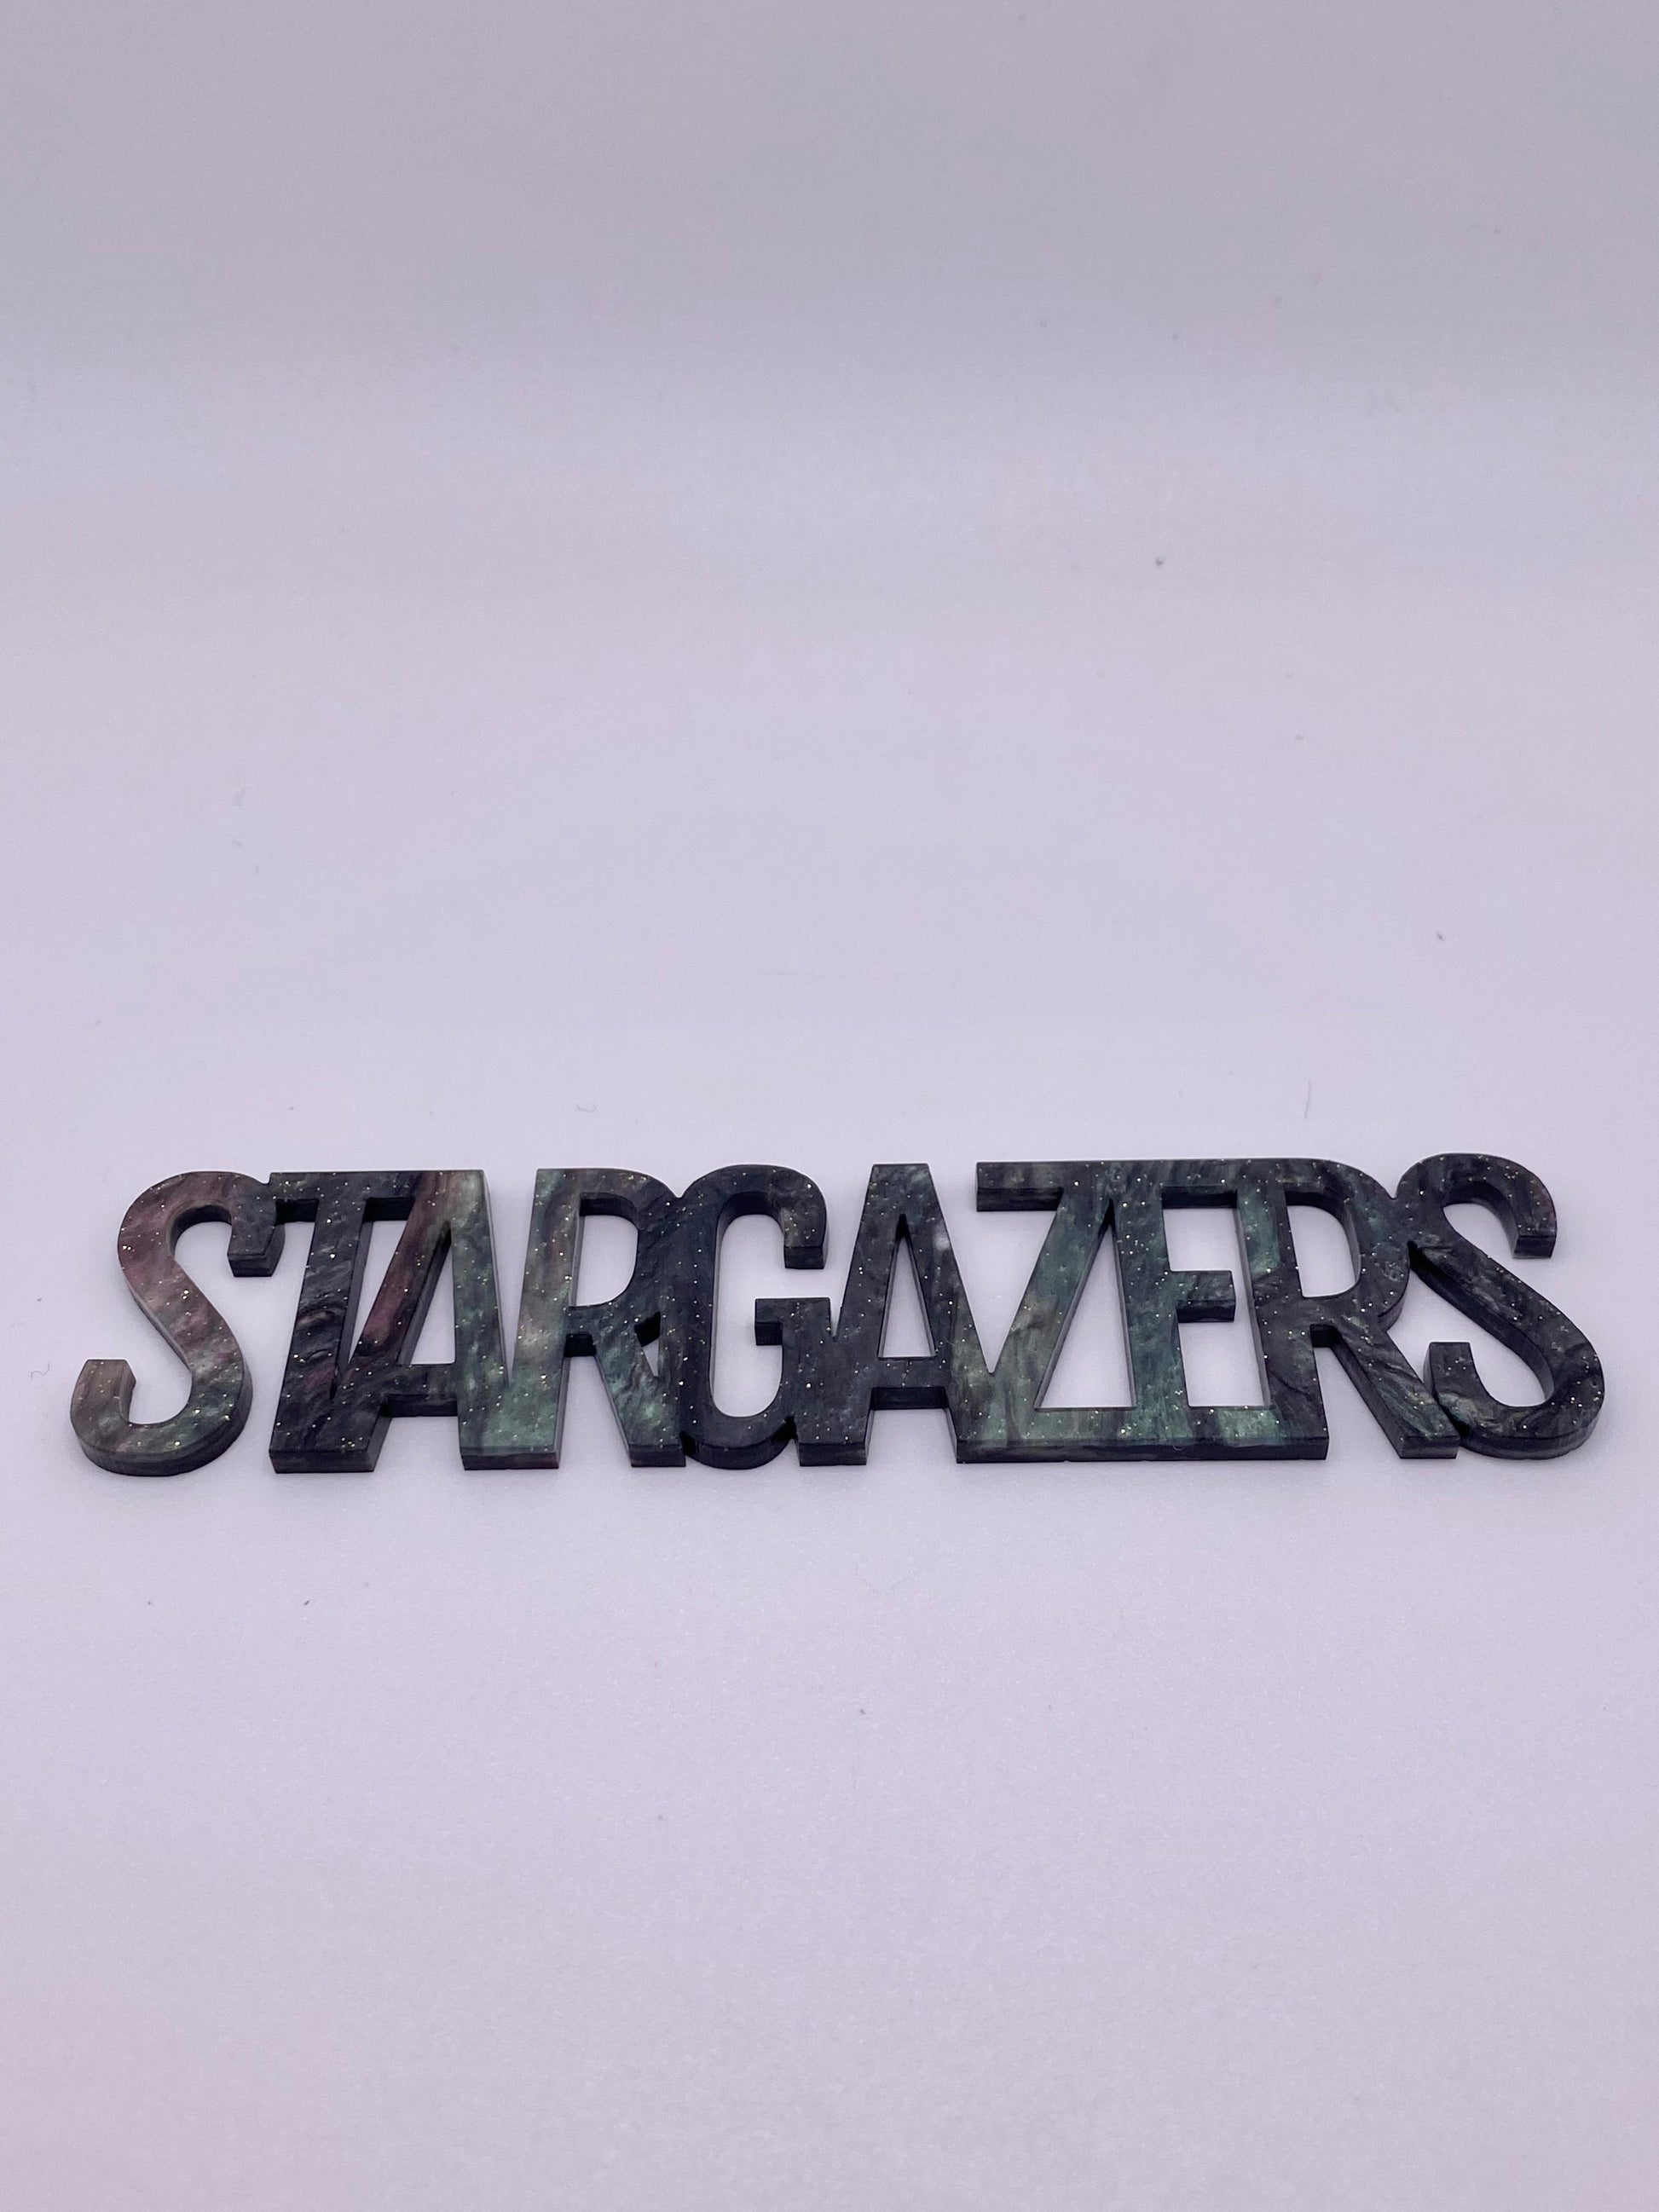 Stargazers - Creative Designs By Kari